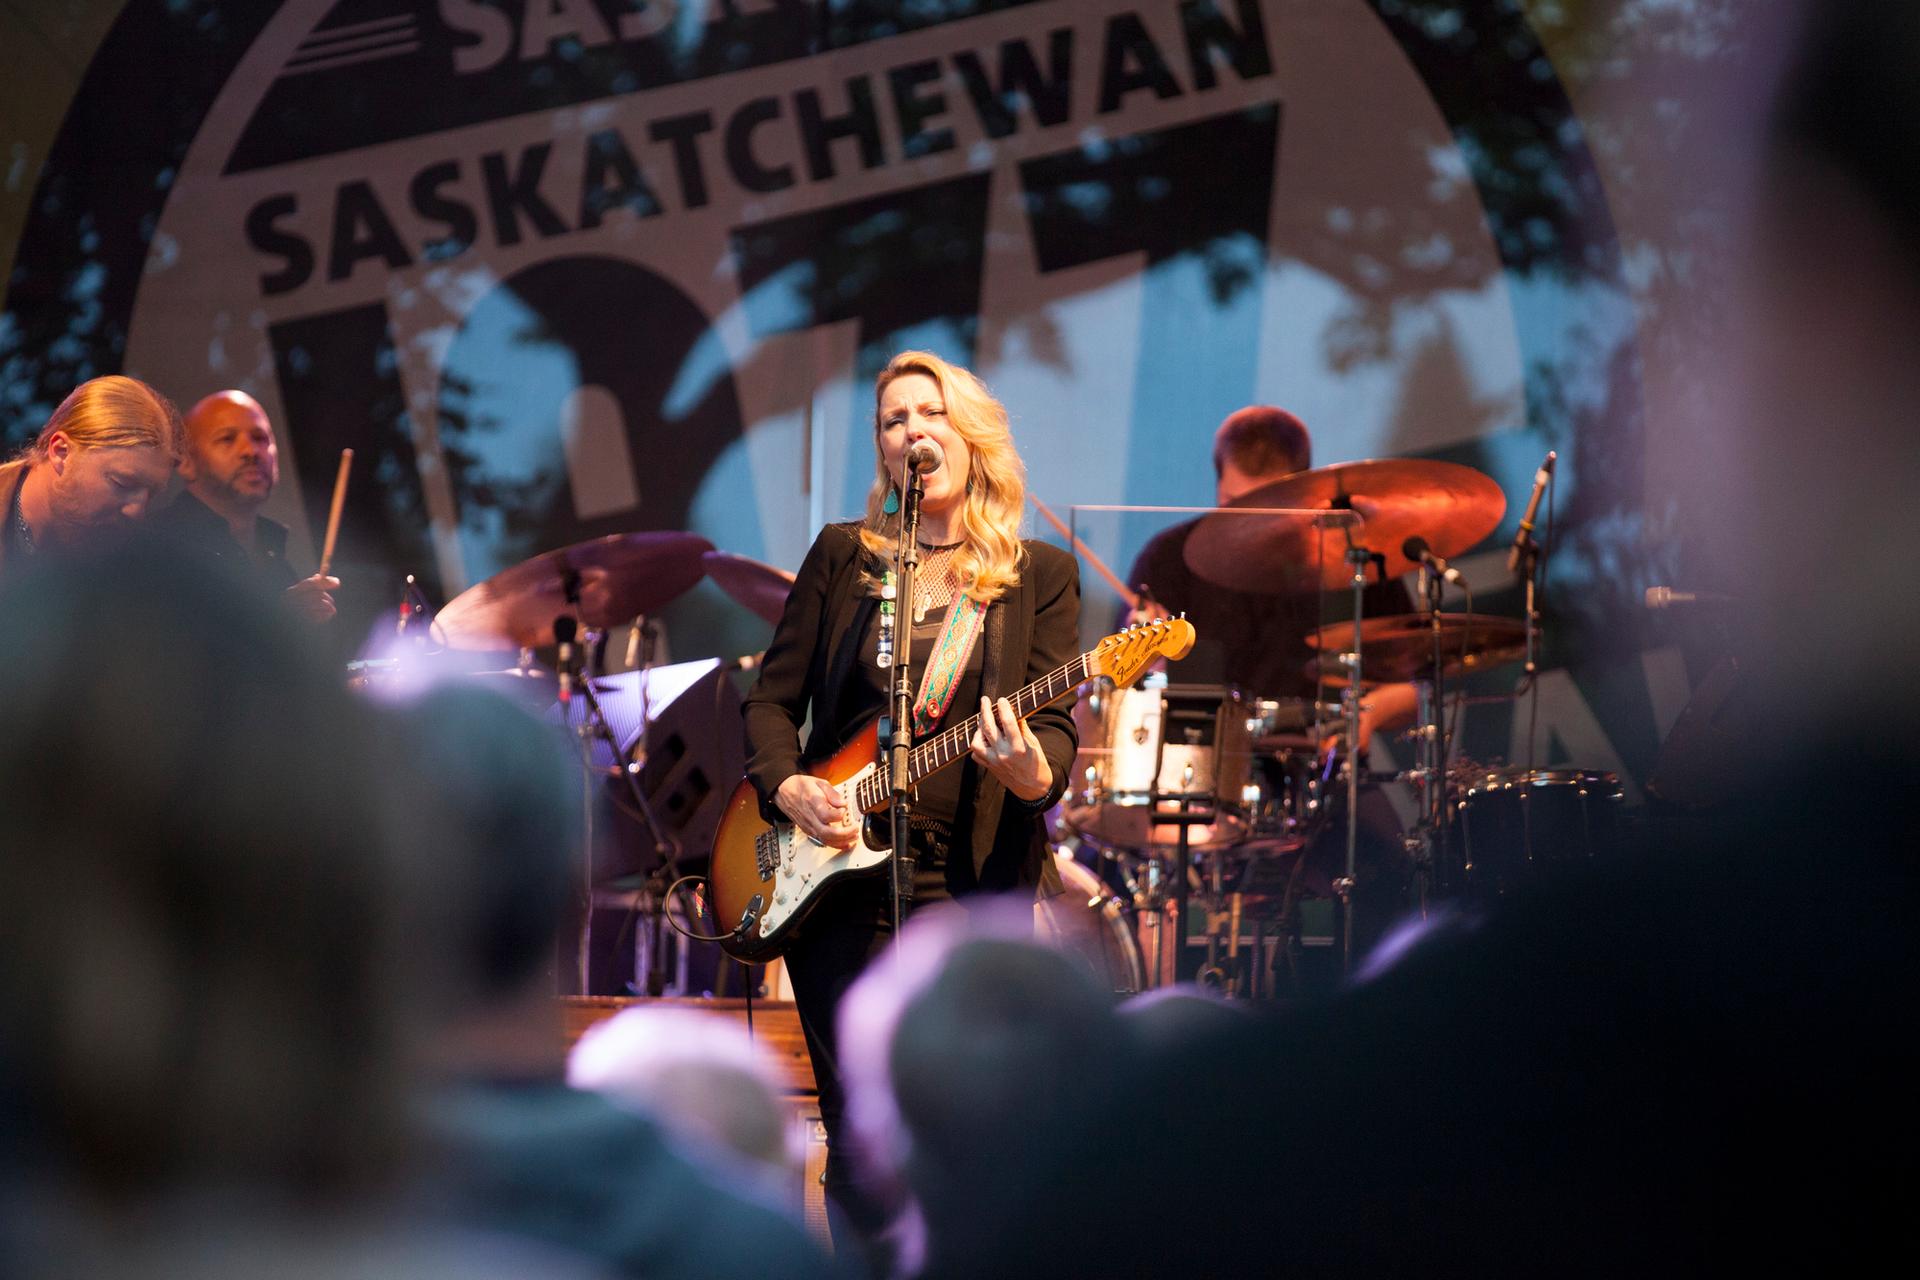 Sasktel Saskatchewan Jazz Festival